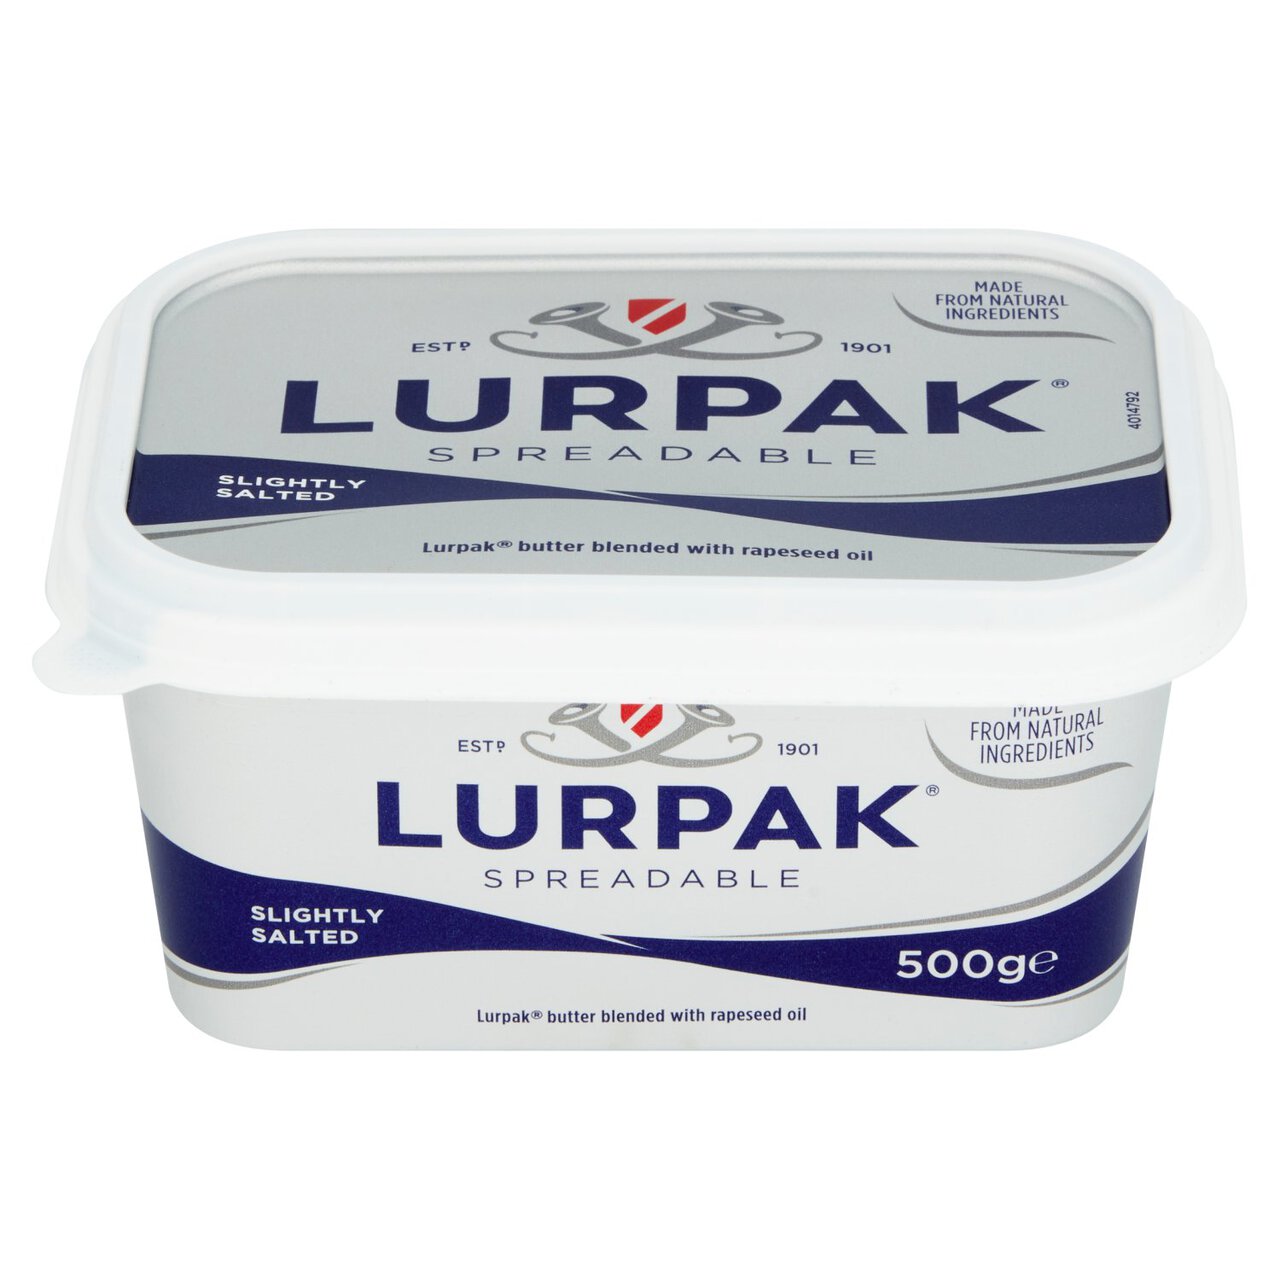 Lurpak Spreadable Slightly Salted Butter Blended with Rapeseed Oil 500g